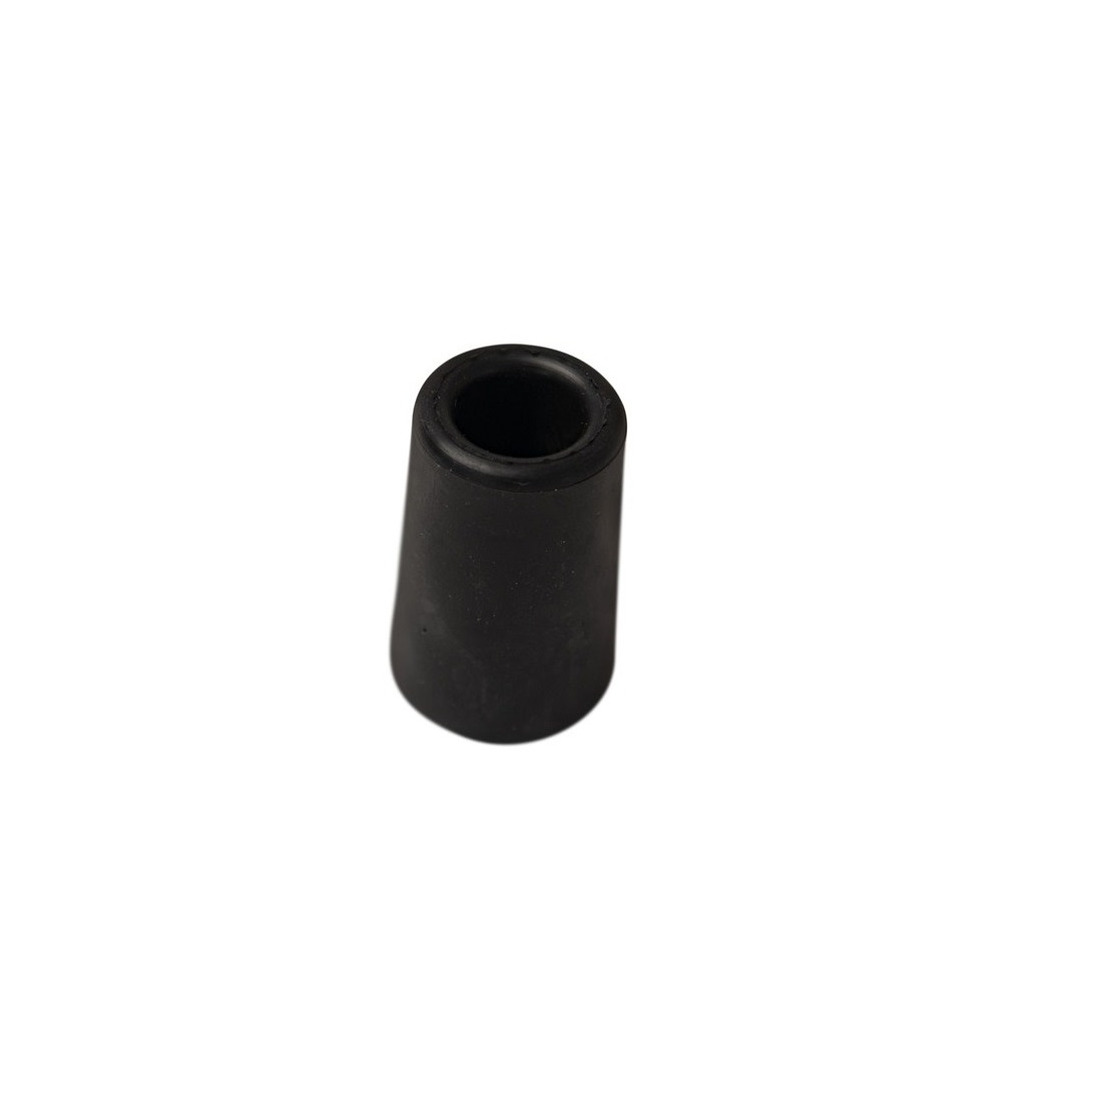 1x stuks deurstopper / deurbuffer rubber zwart 60 mm